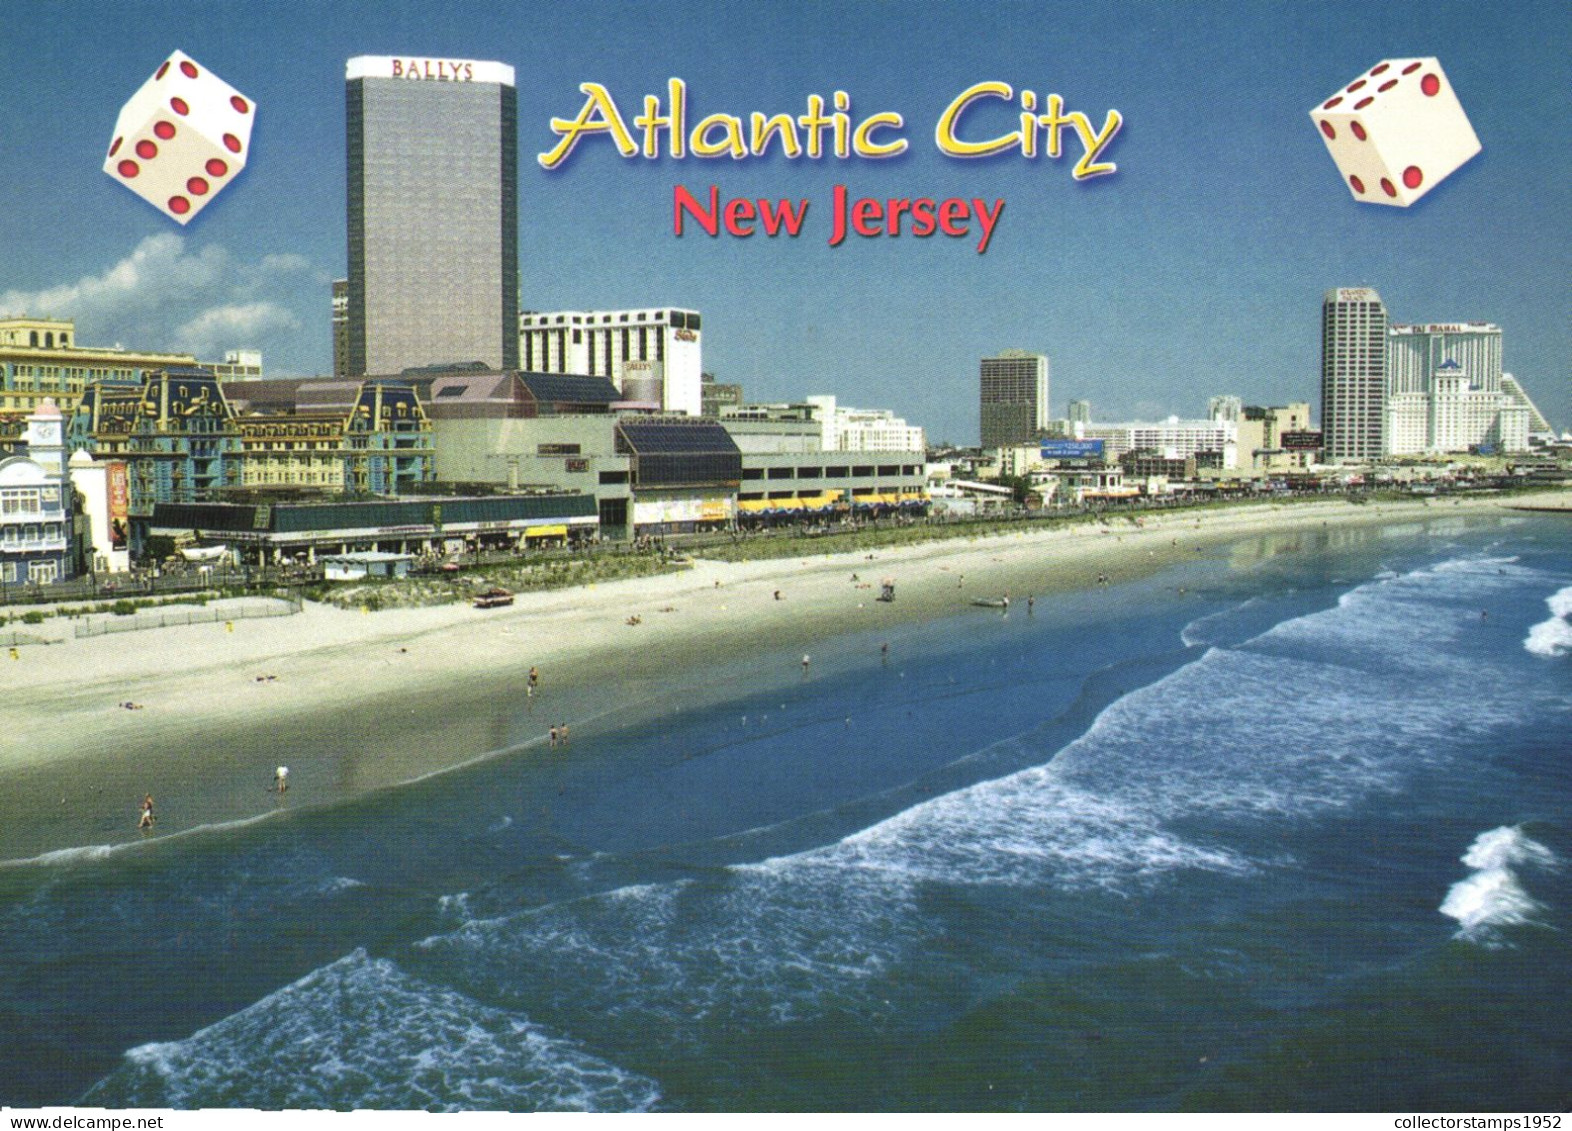 ATLANTIC CITY, BEACH, ARCHITECTURE, SKYLINE, UNITED STATES - Atlantic City